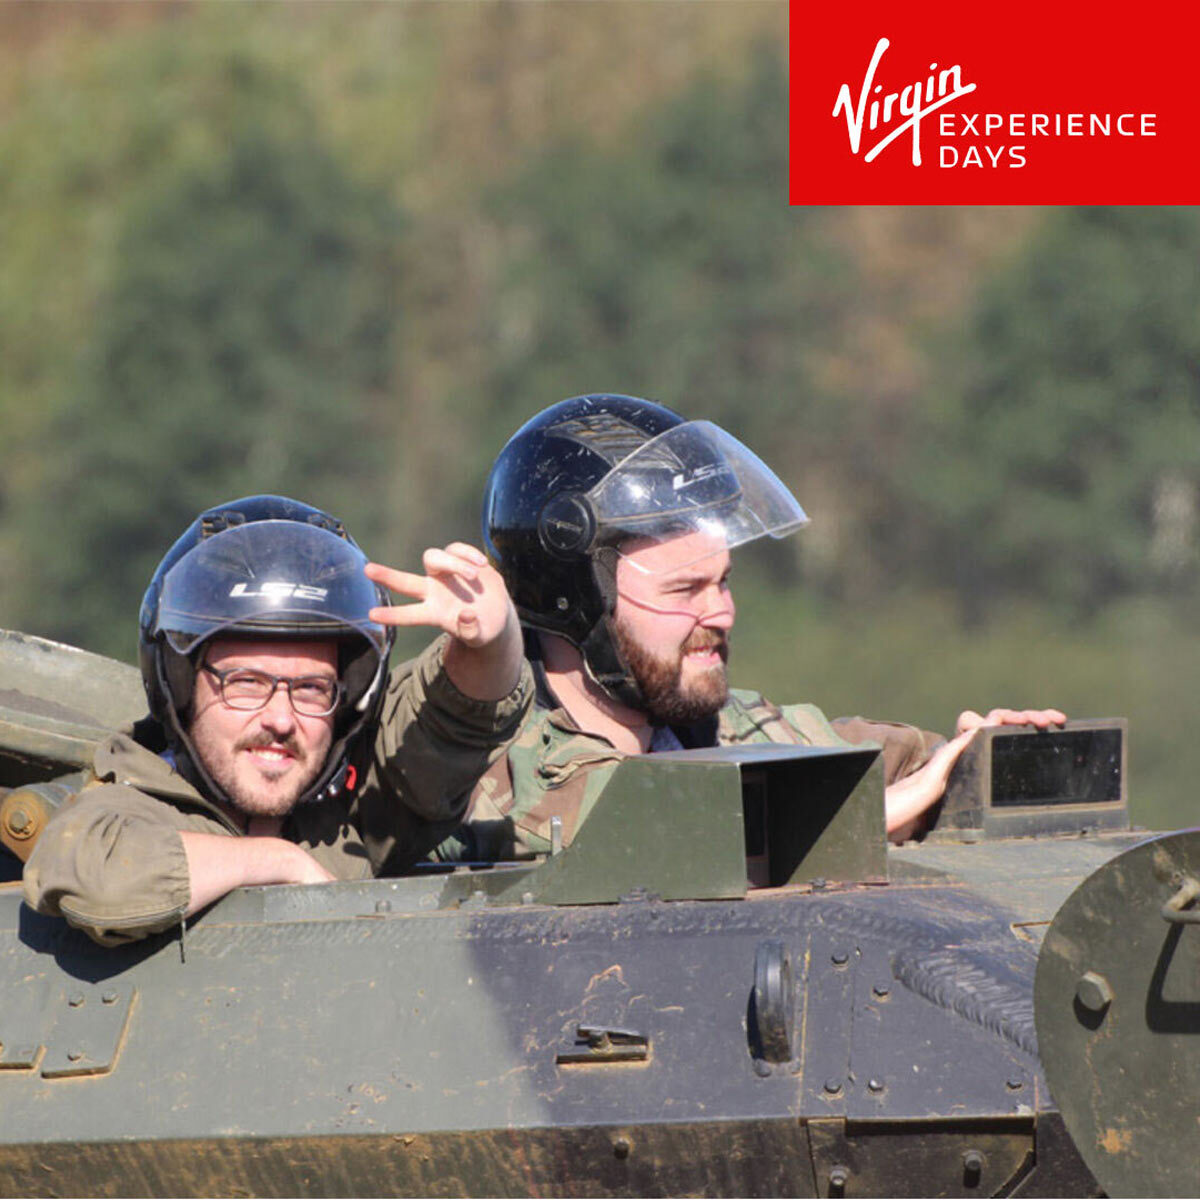 Buy Virgin Experience Tank Driving Taster Image3 at Costco.co.uk